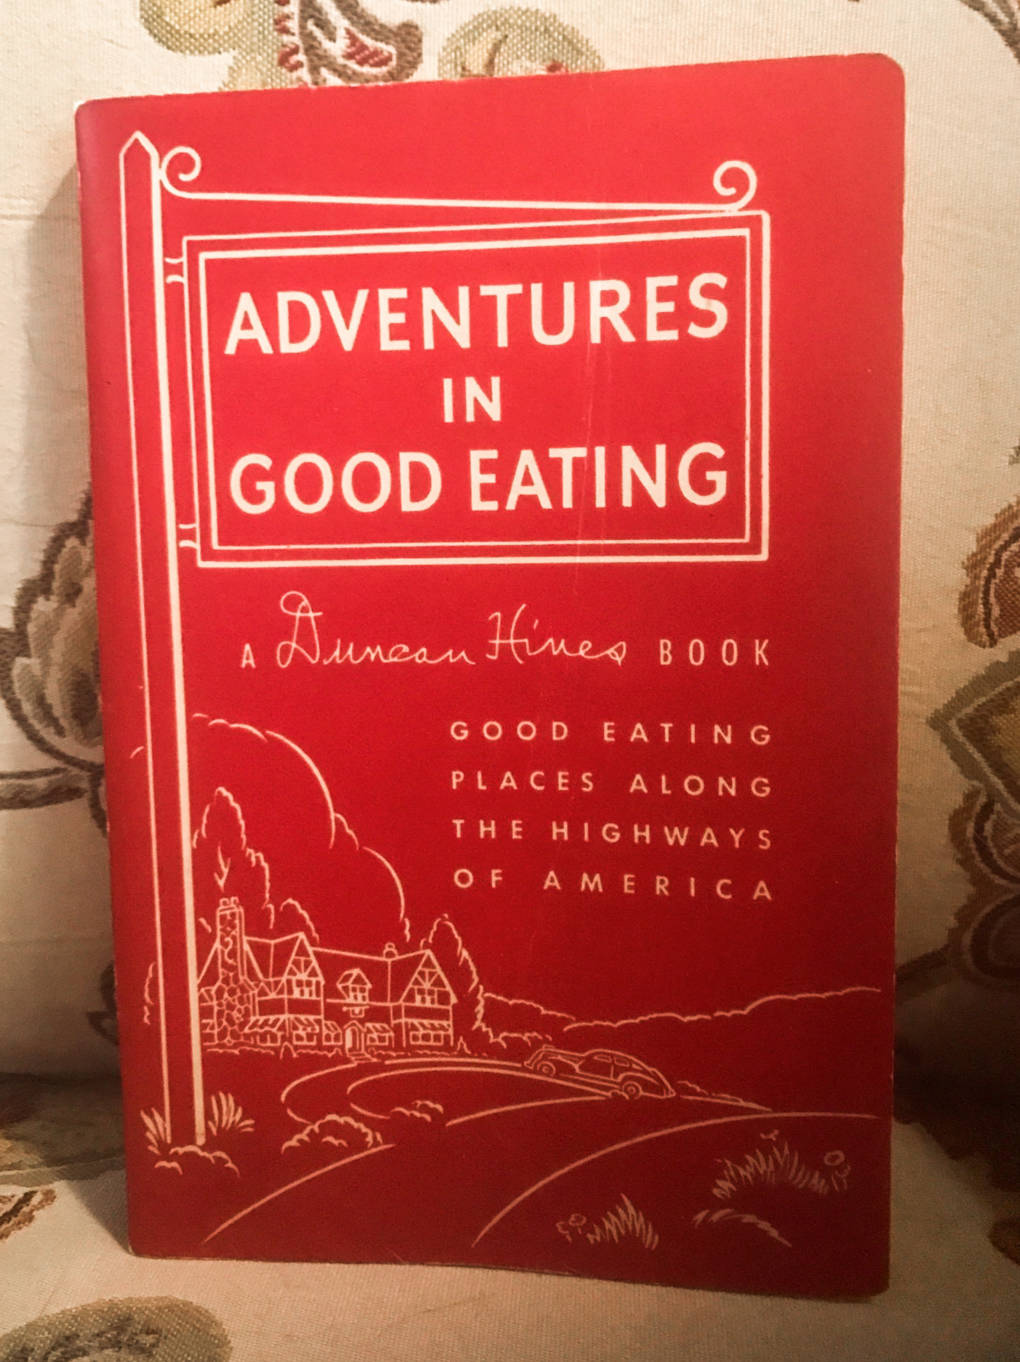 1946 copy of "Adventures in Good Eating."